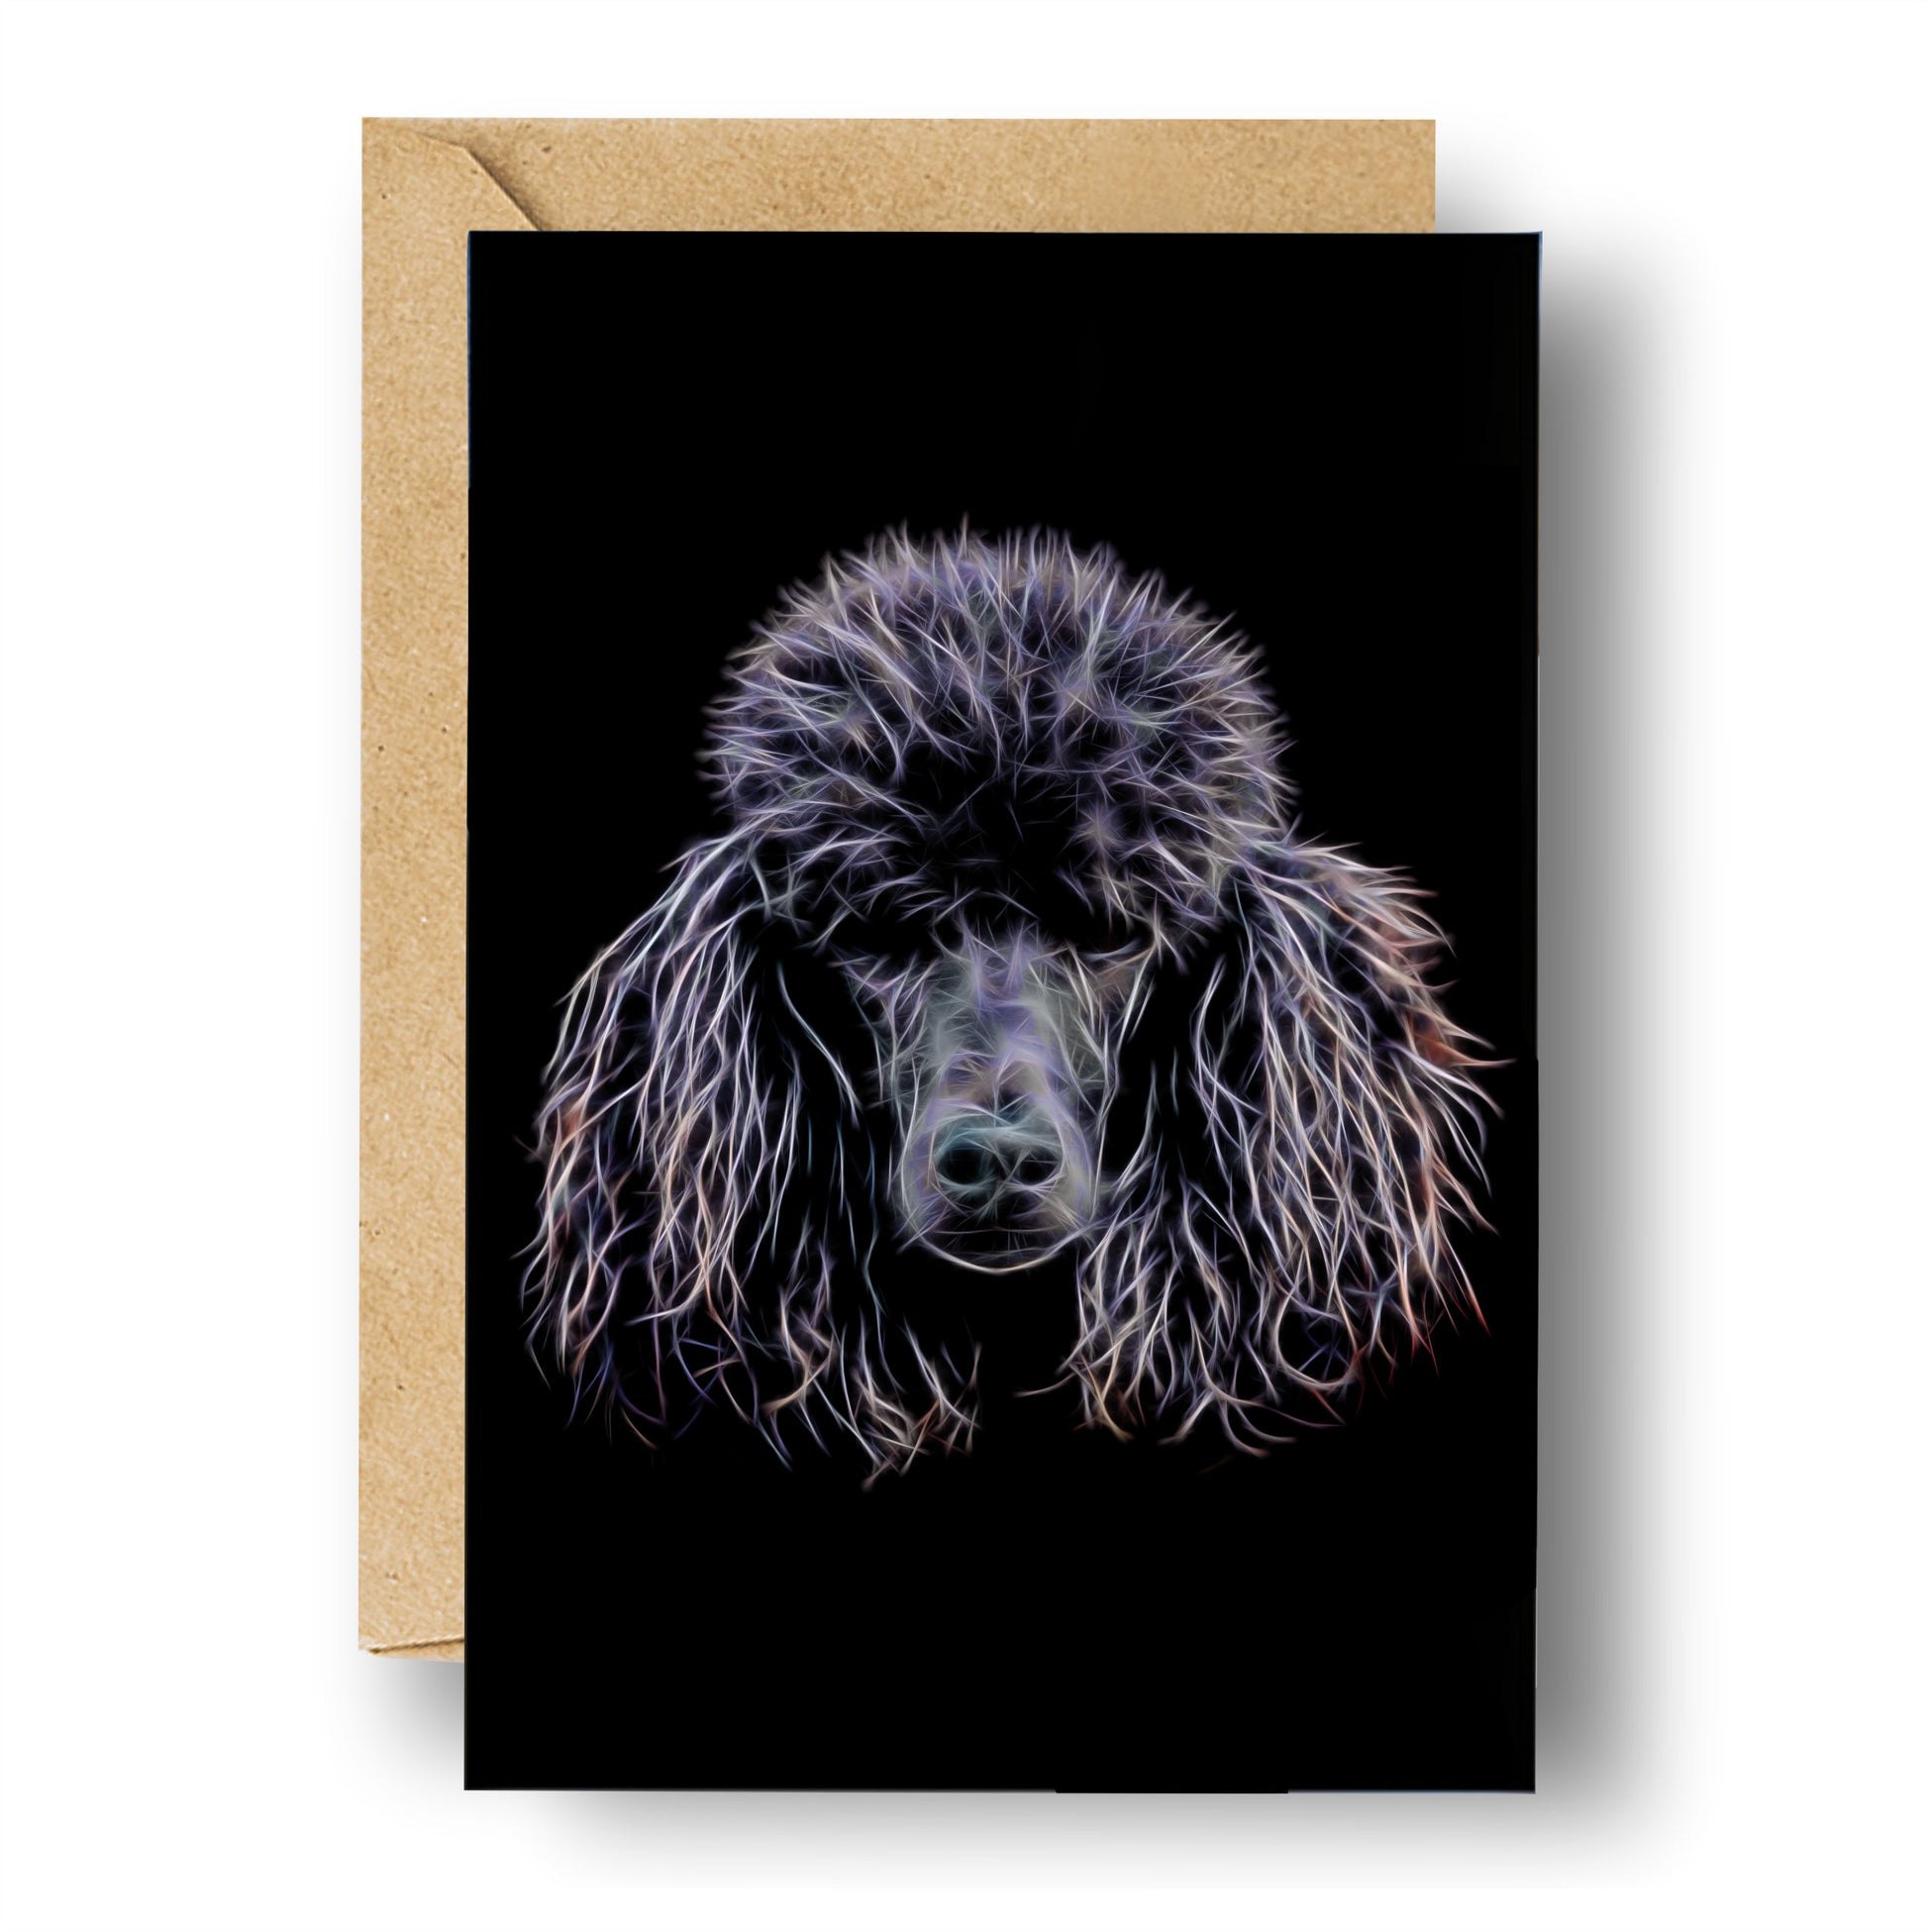 Black Poodle Blank Birthday Greeting Card with Stunning Fractal Art Design